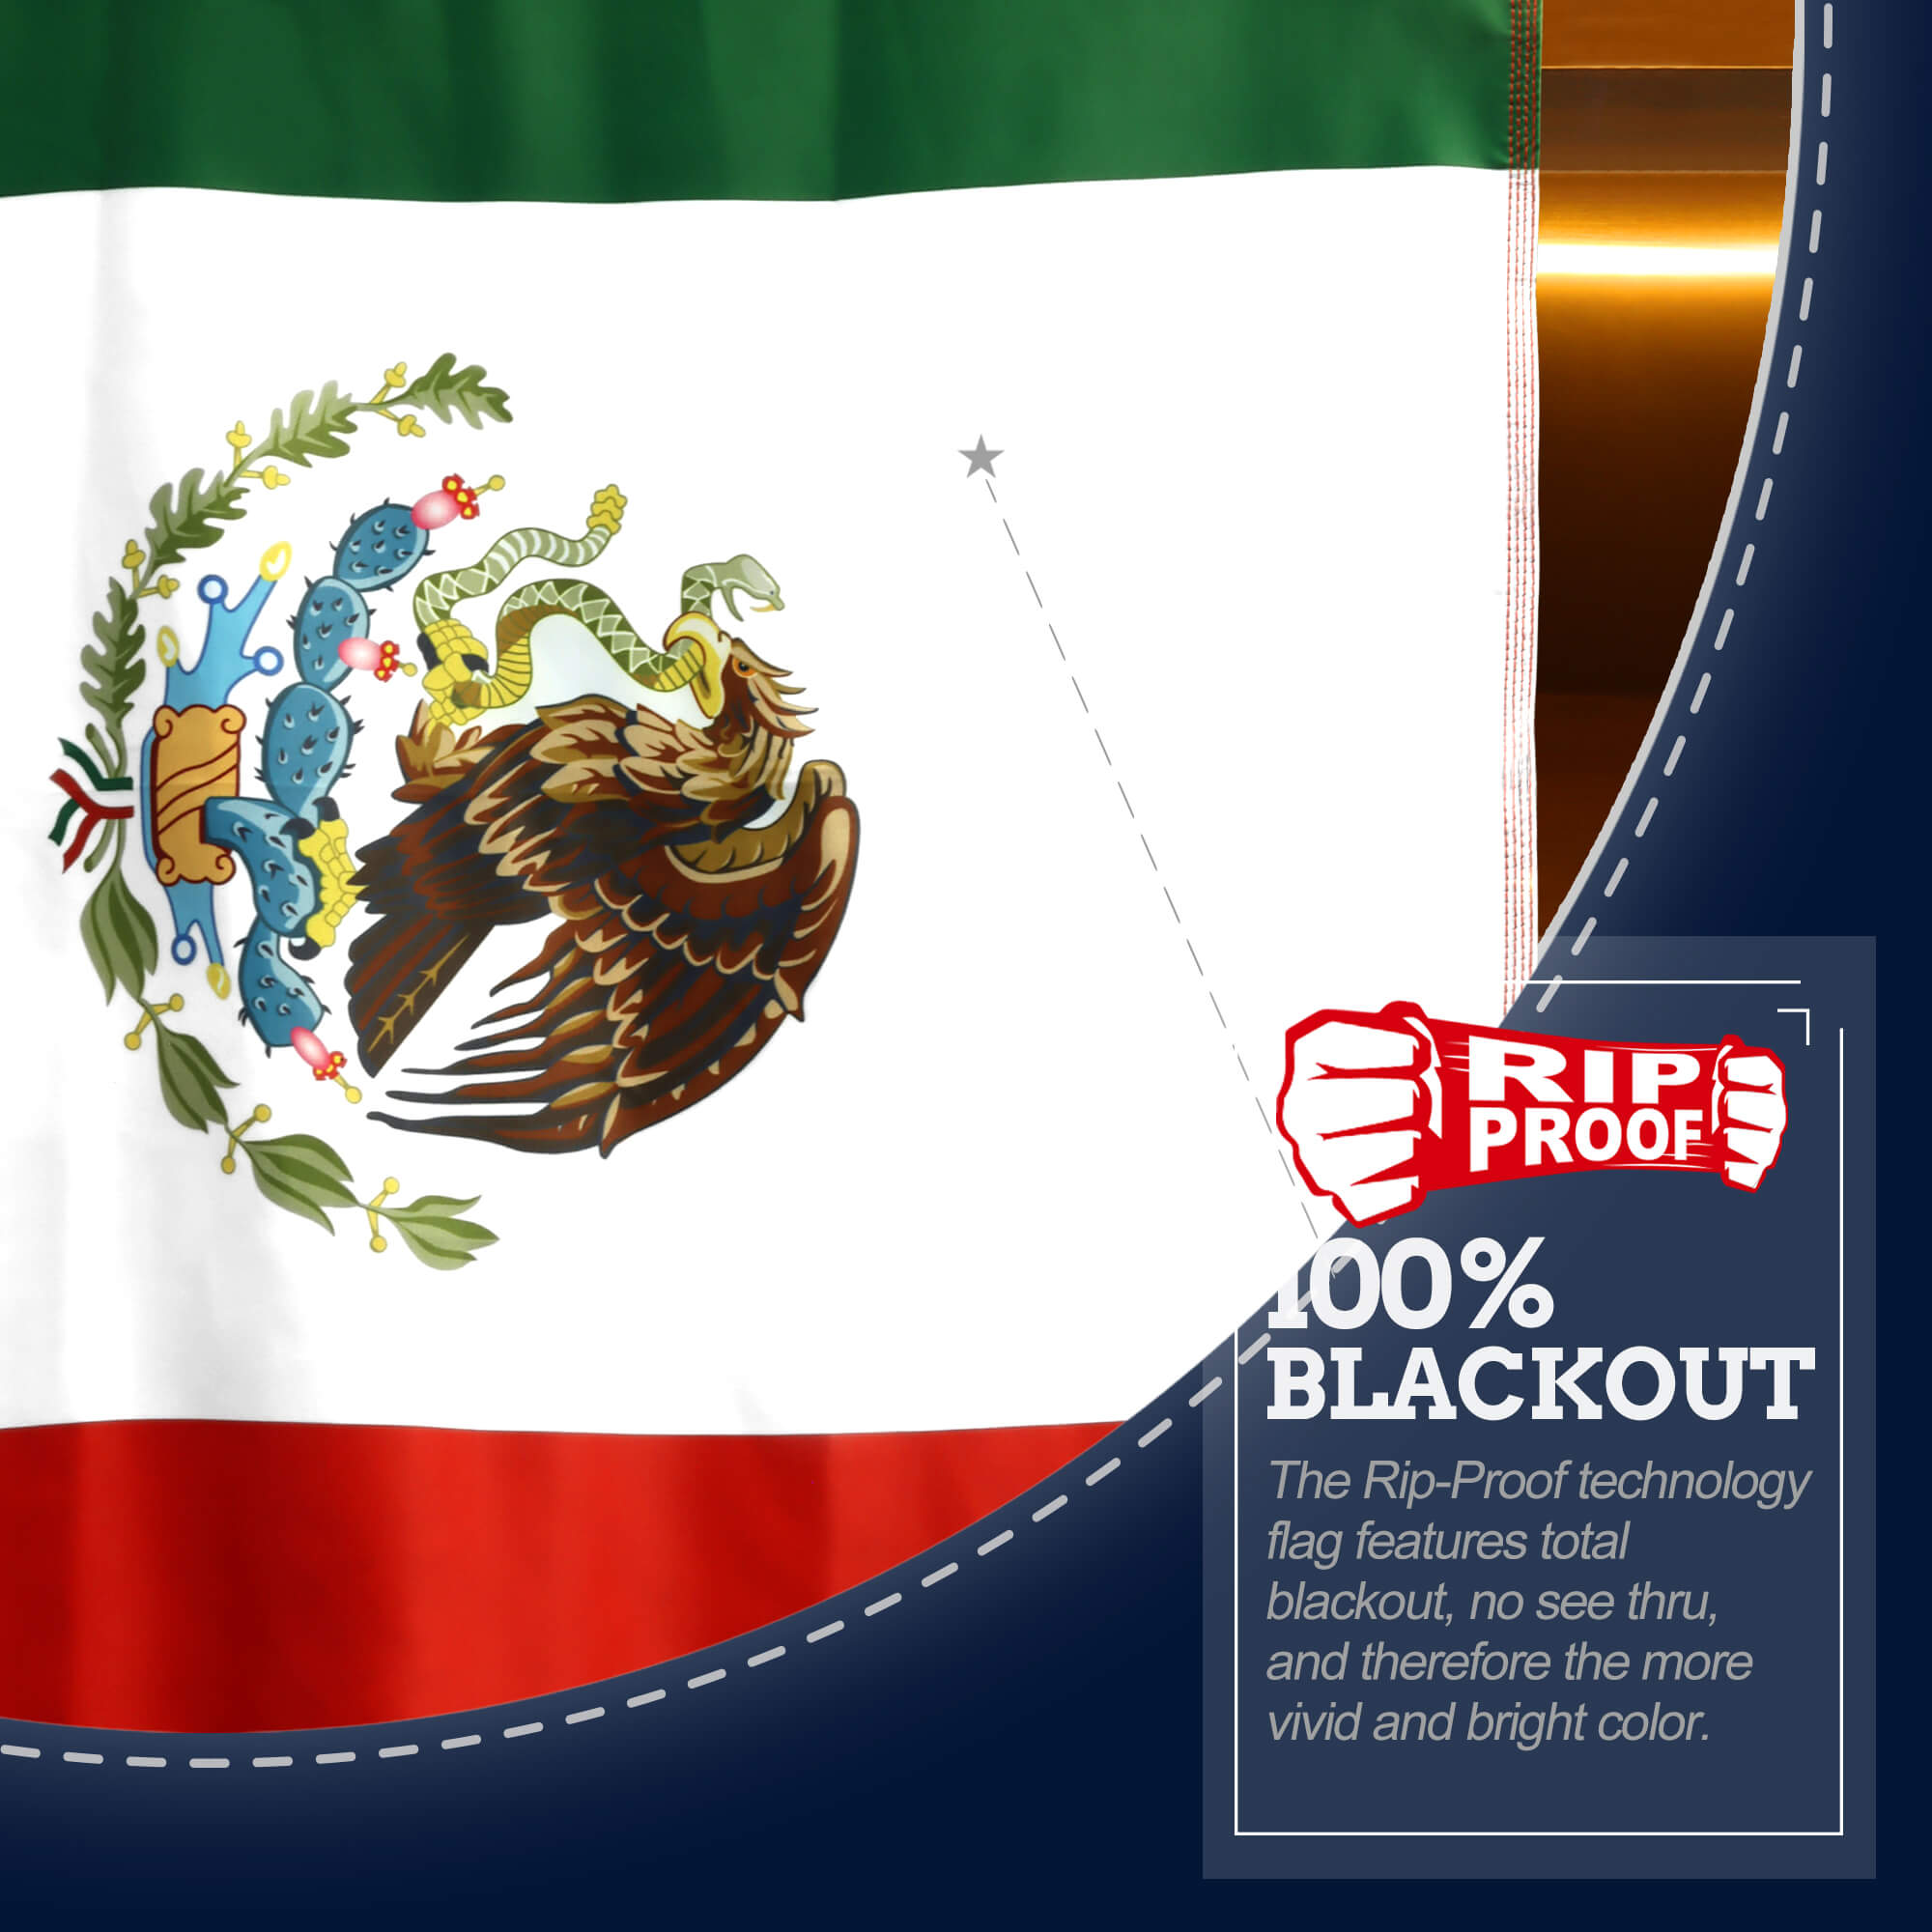 Mexico Flag - Durable, High Quality Mexican Flags